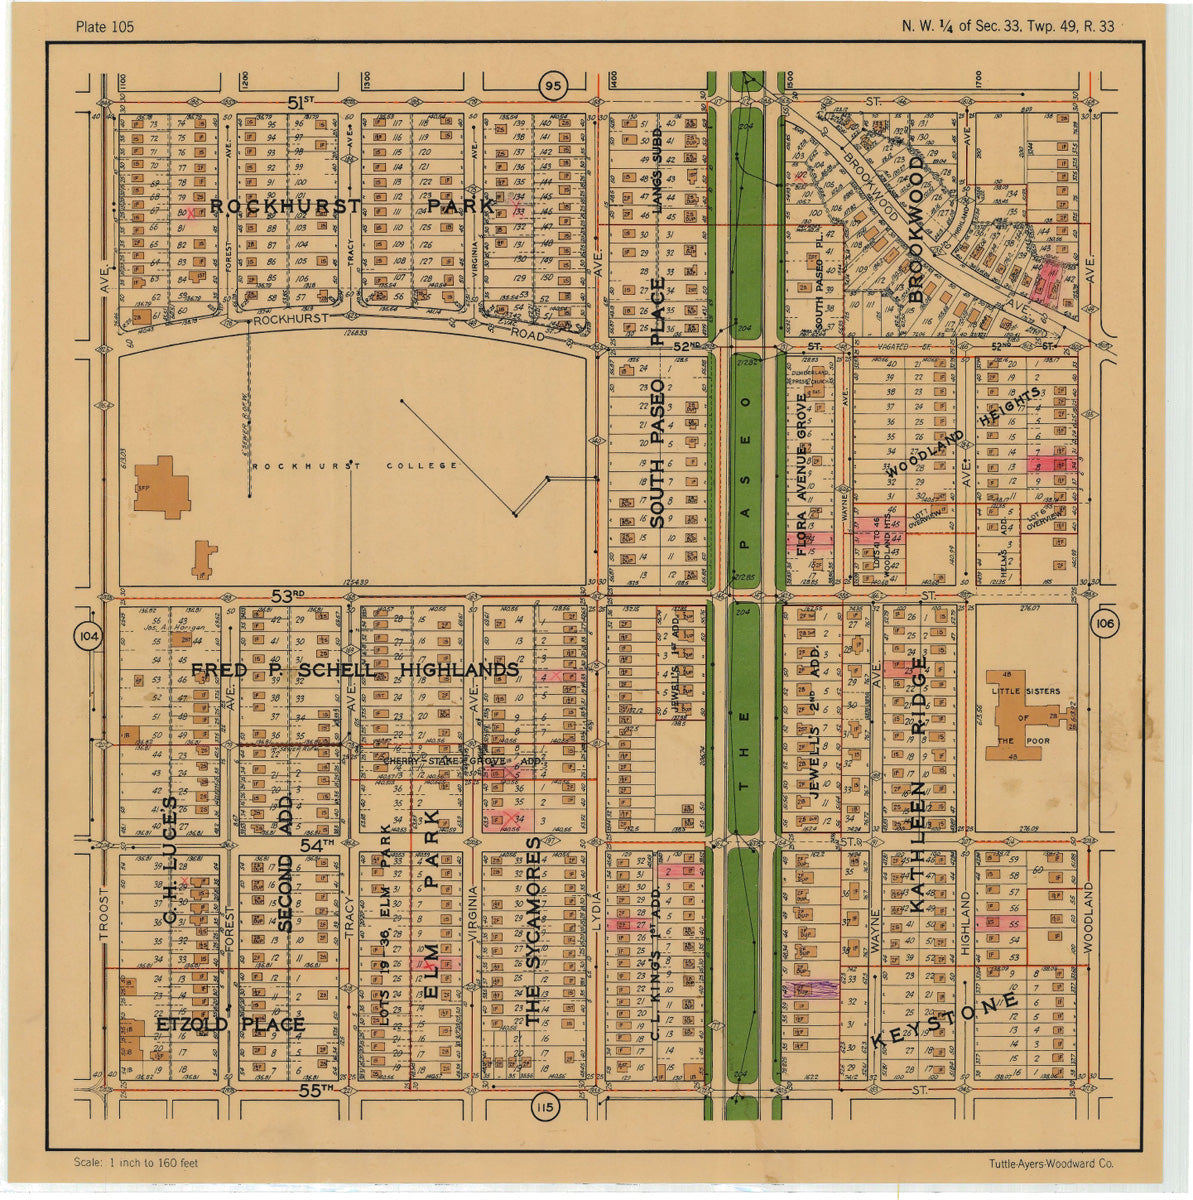 Kansas City 1925 Neighborhood Map - Plate #105 51st-55th Troost-Woodland